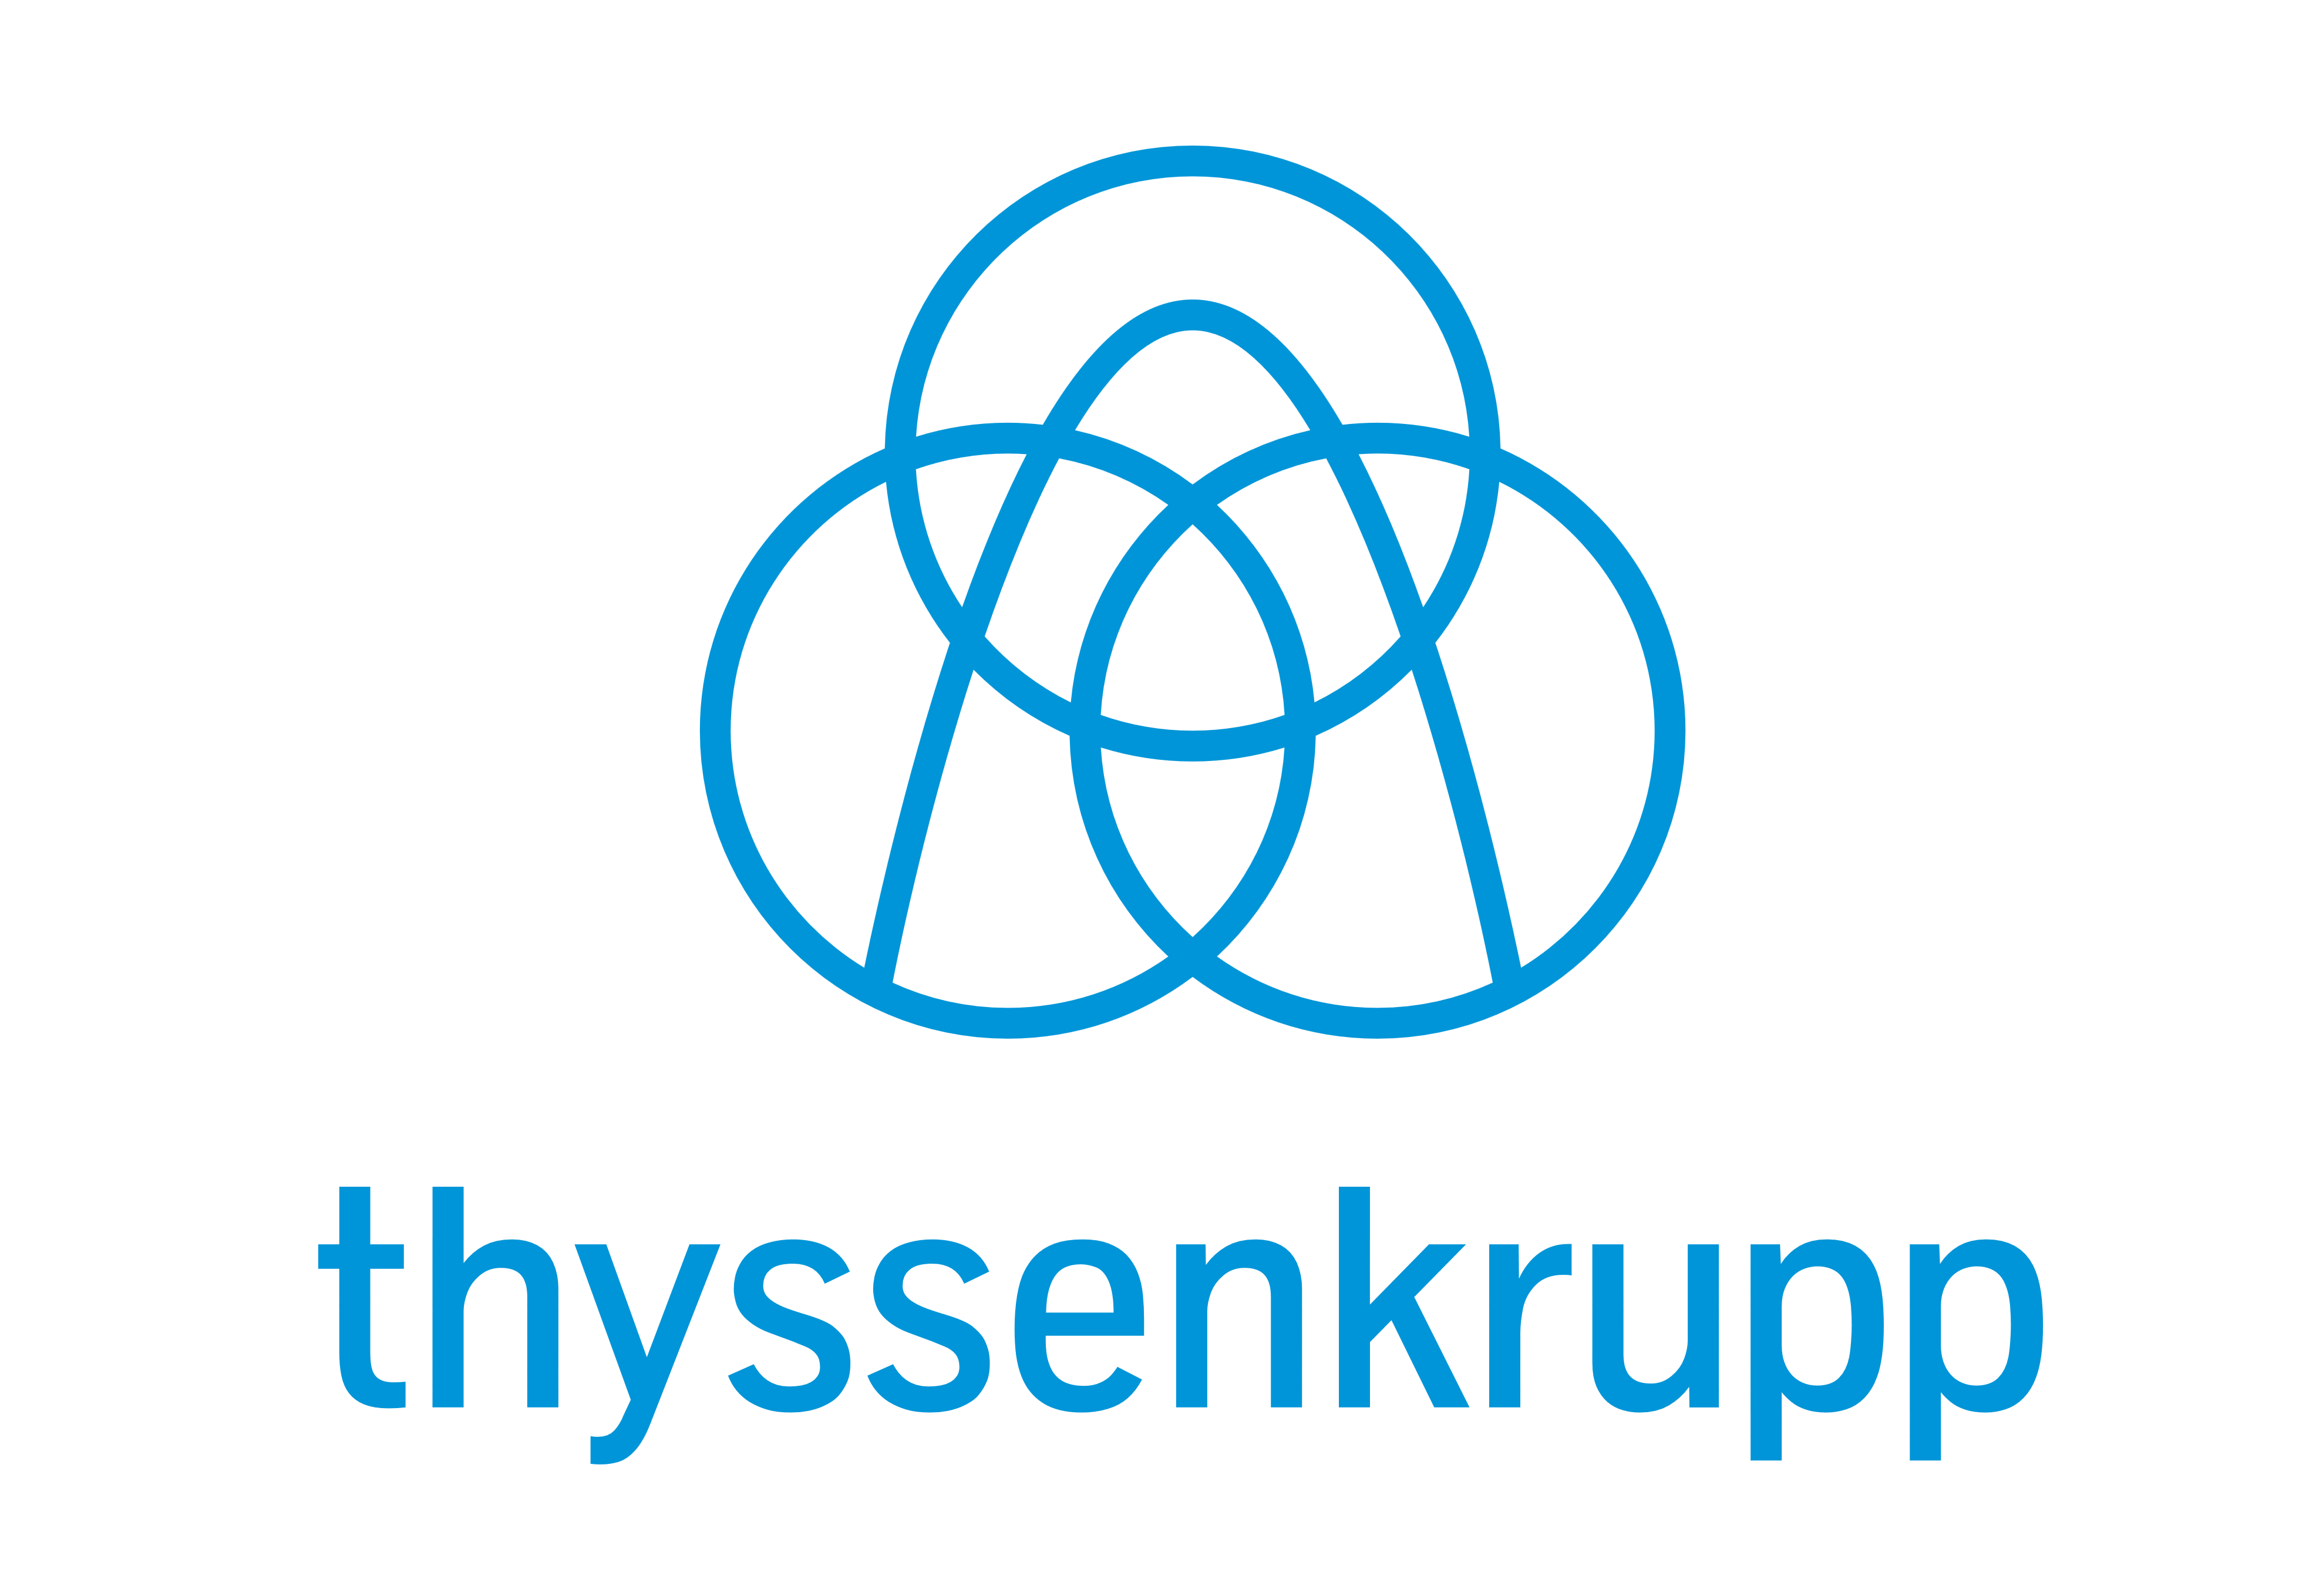 ThyssenKrupp – Logos Download